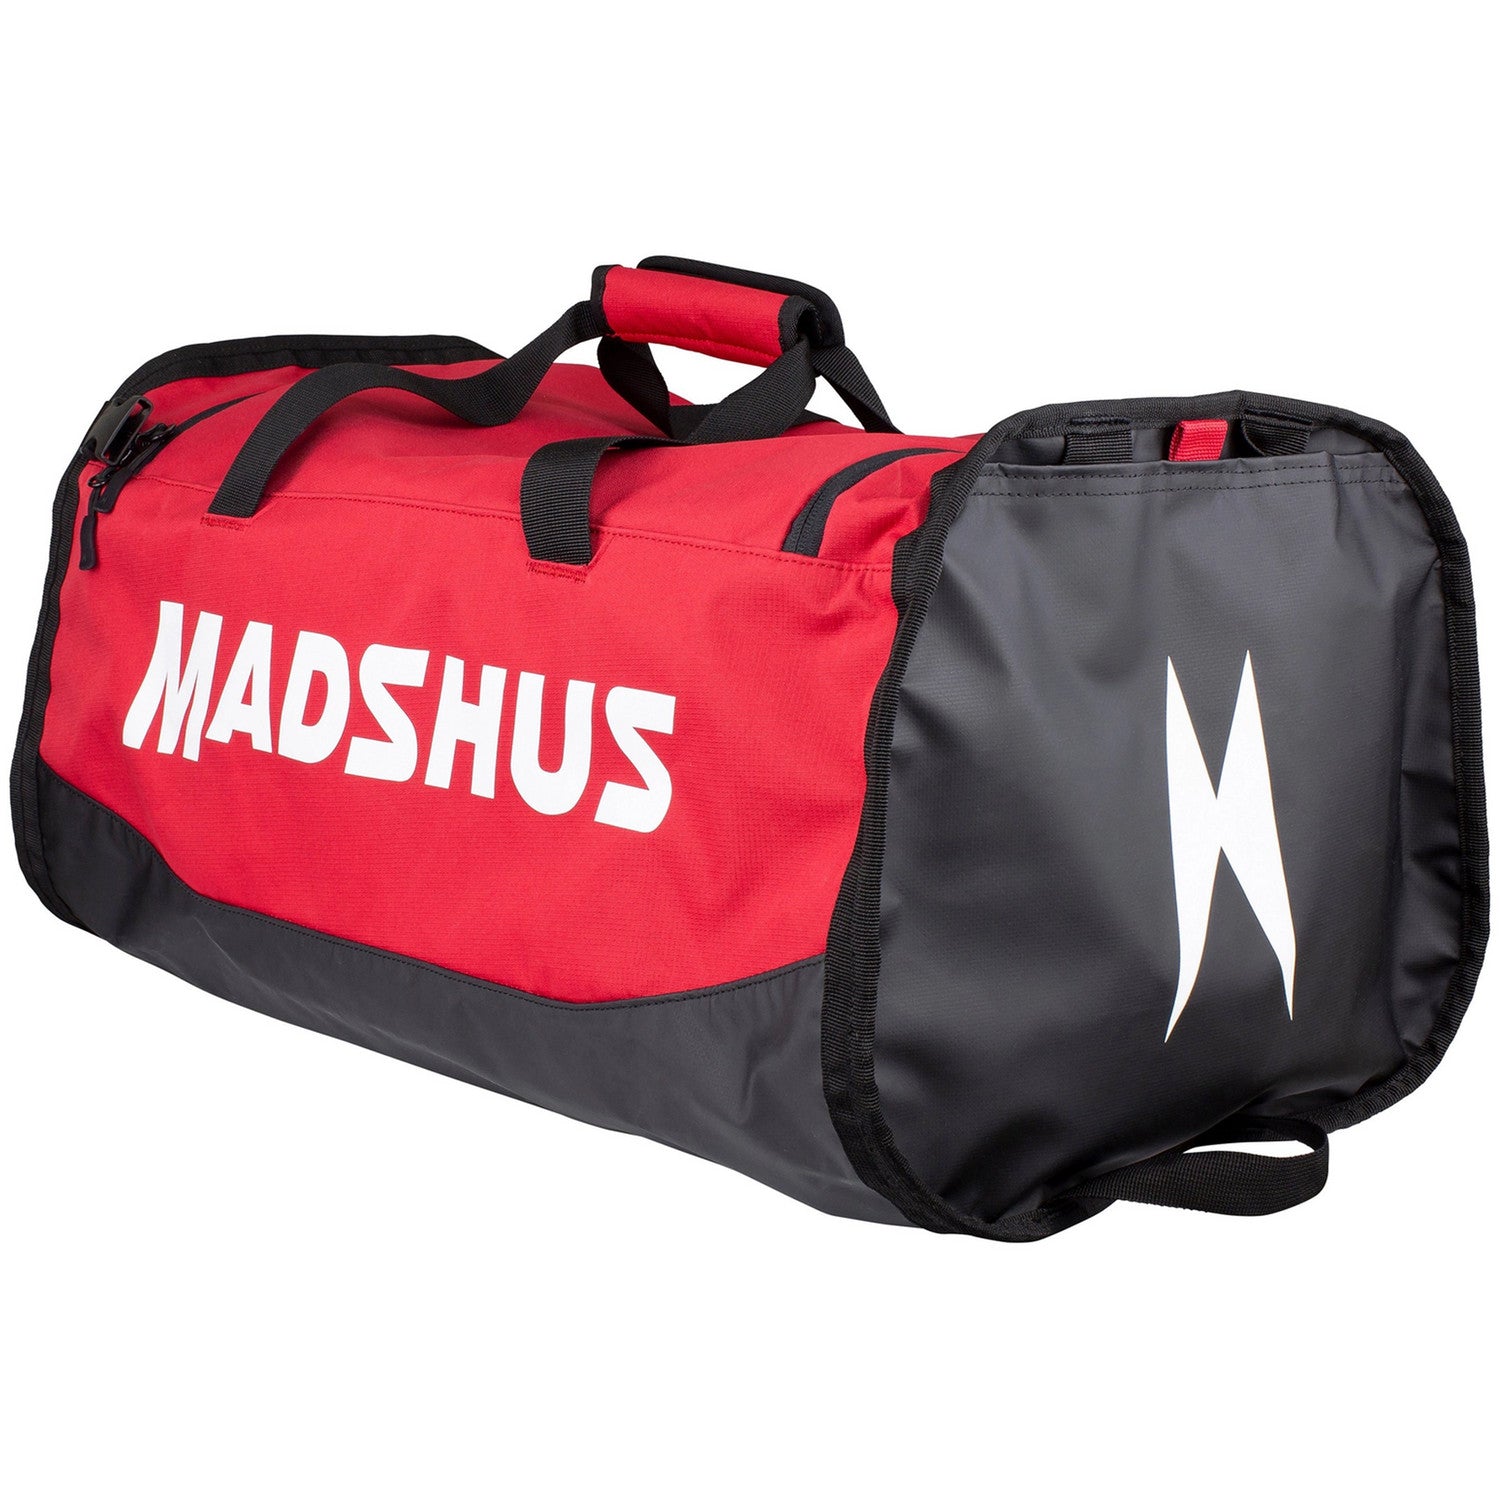 Madshus Red Duffel 65L - 0